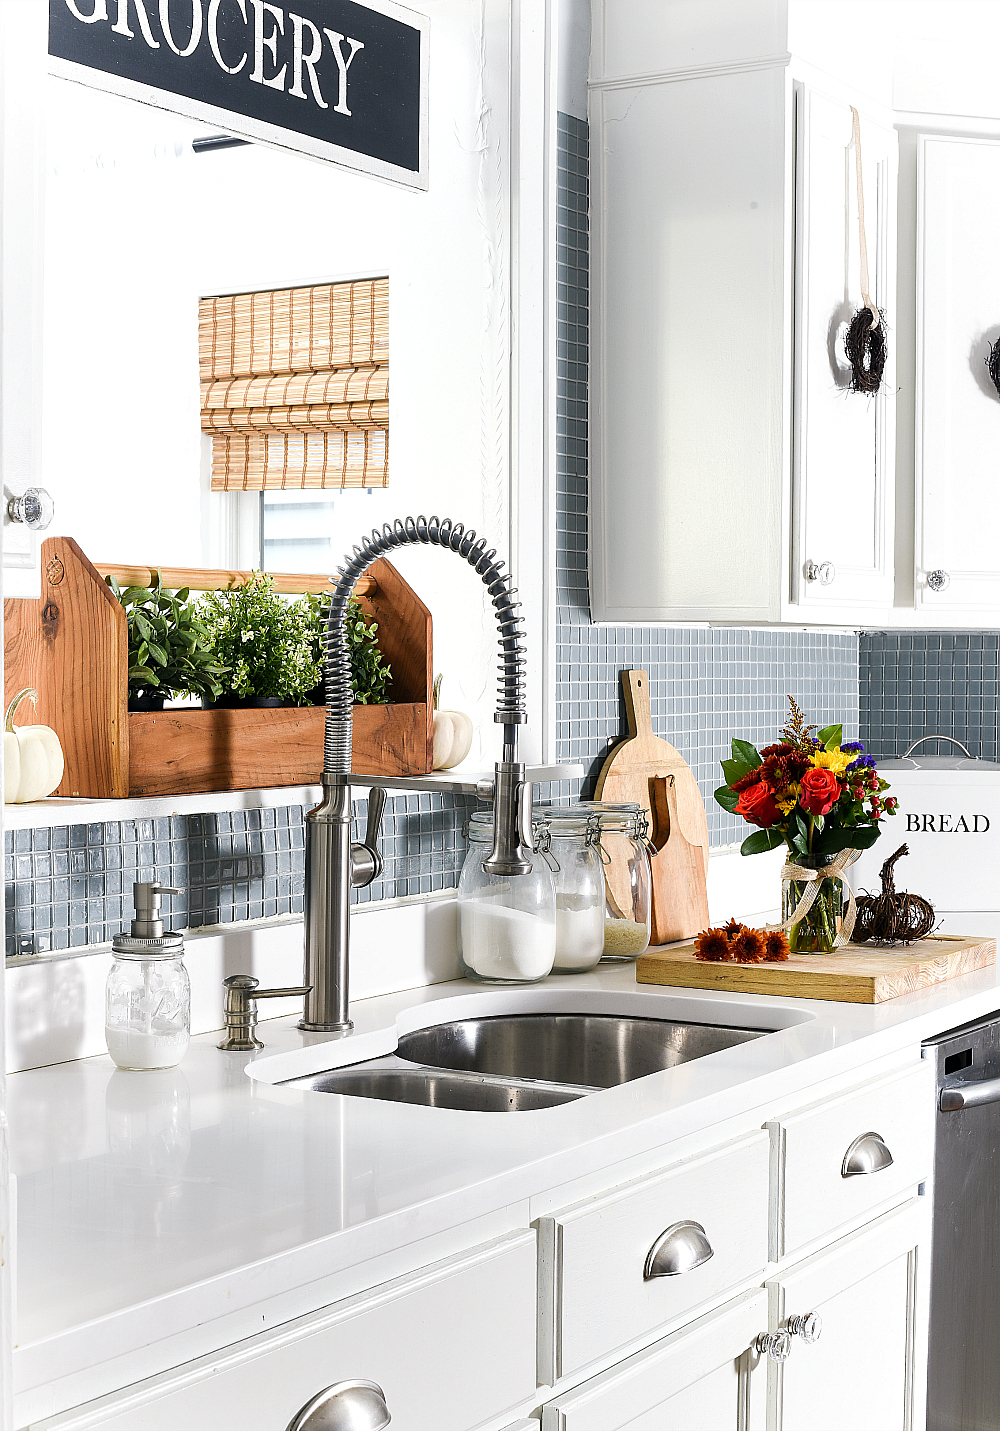 Fall in the Kitchen - White Kitchen cabinets, blue glass tile backsplash